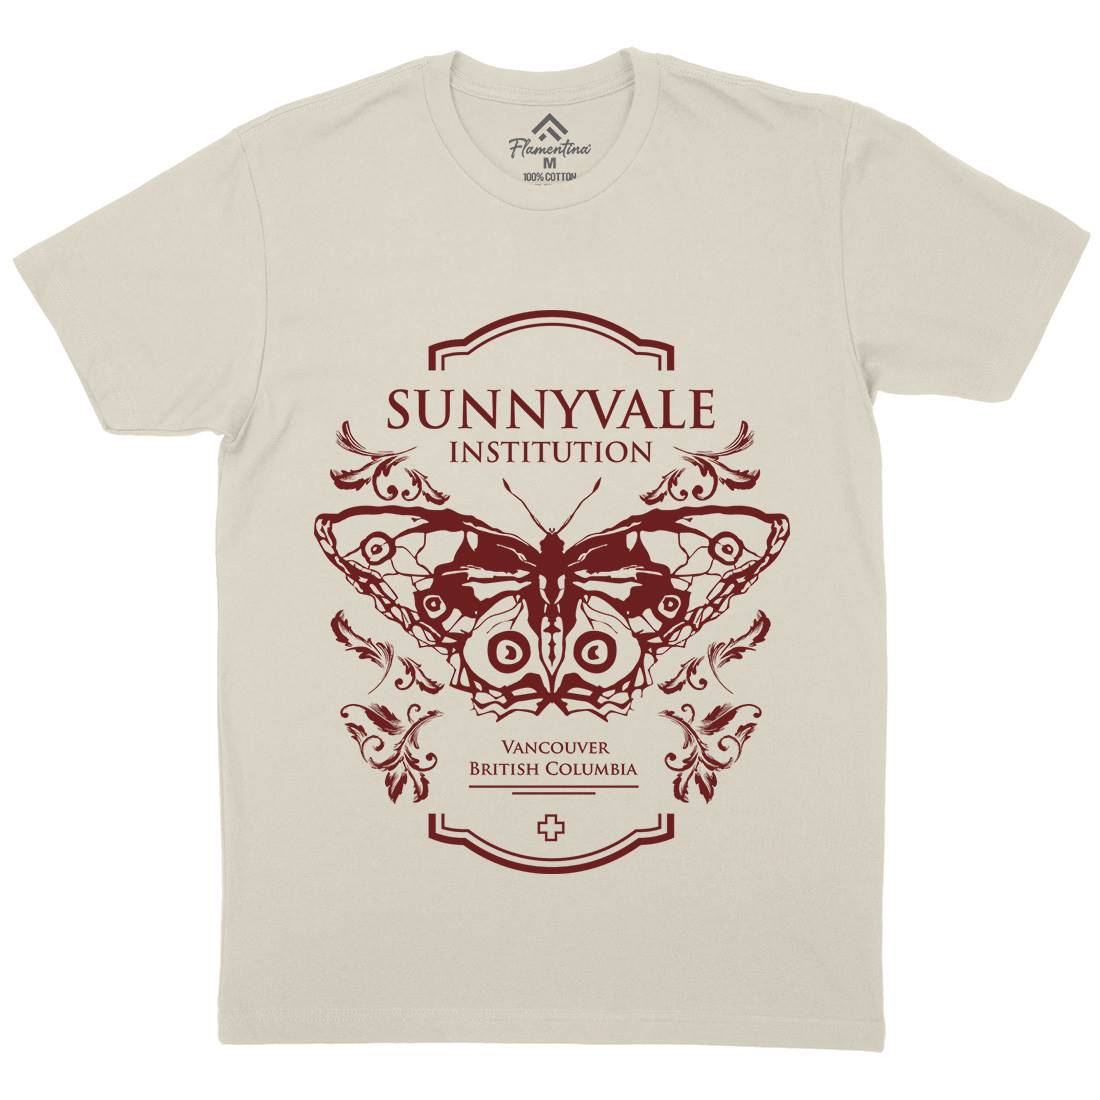 Sunnyvale Institution Mens Organic Crew Neck T-Shirt Space D232